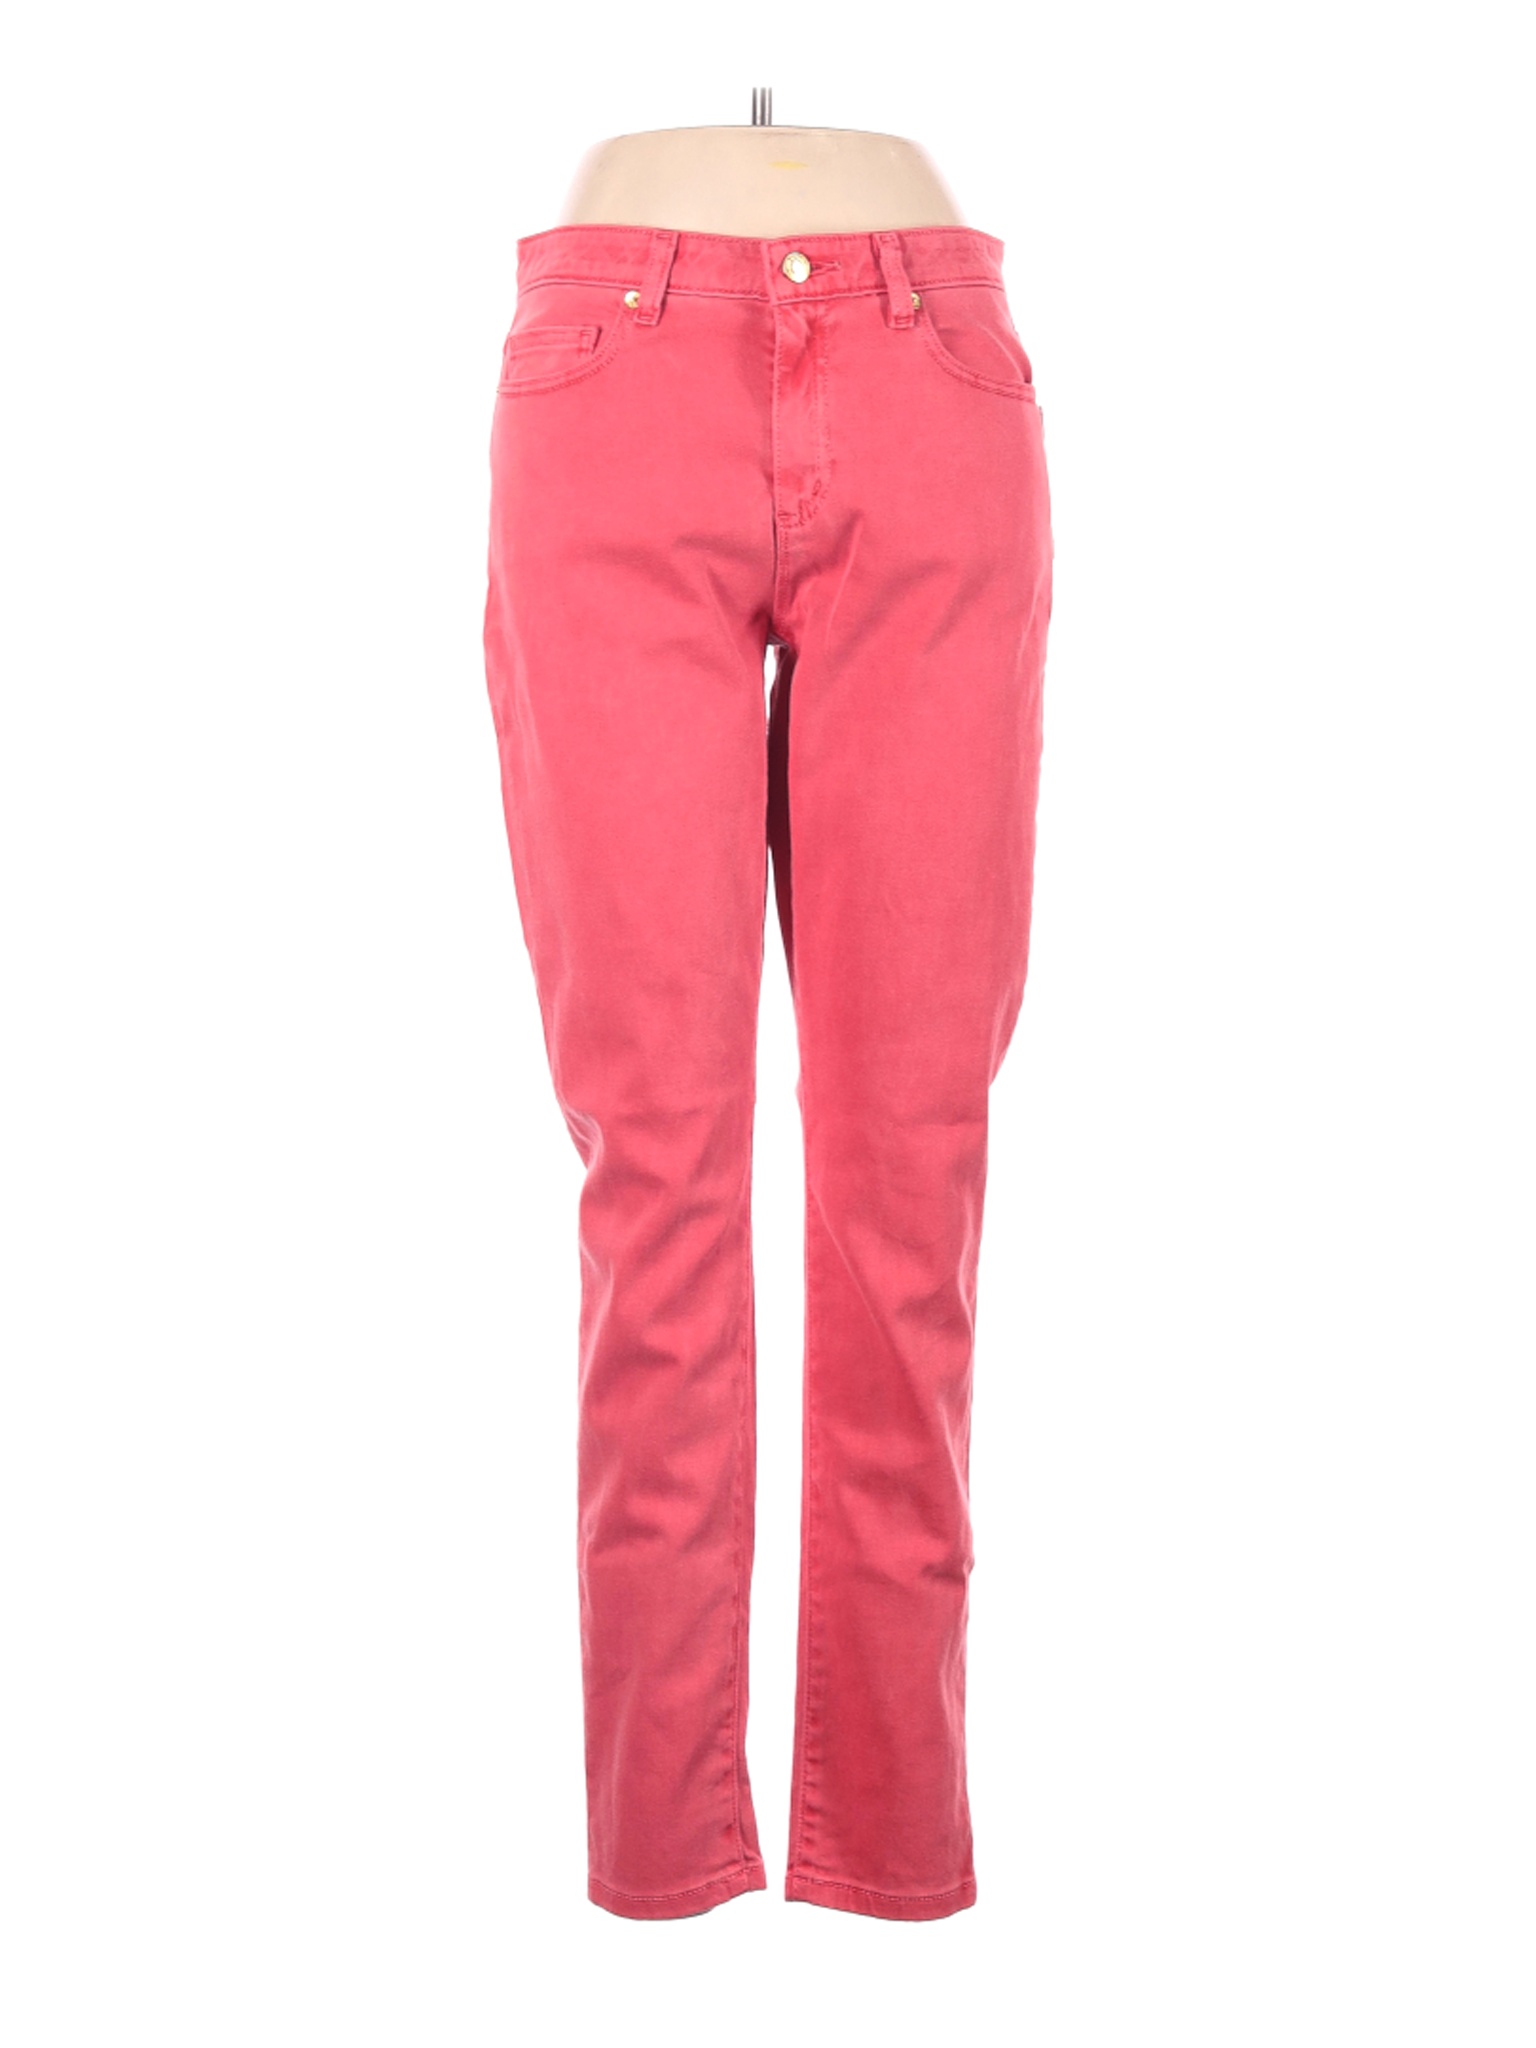 NWT MICHAEL Michael Kors Women Pink Jeans 8 | eBay